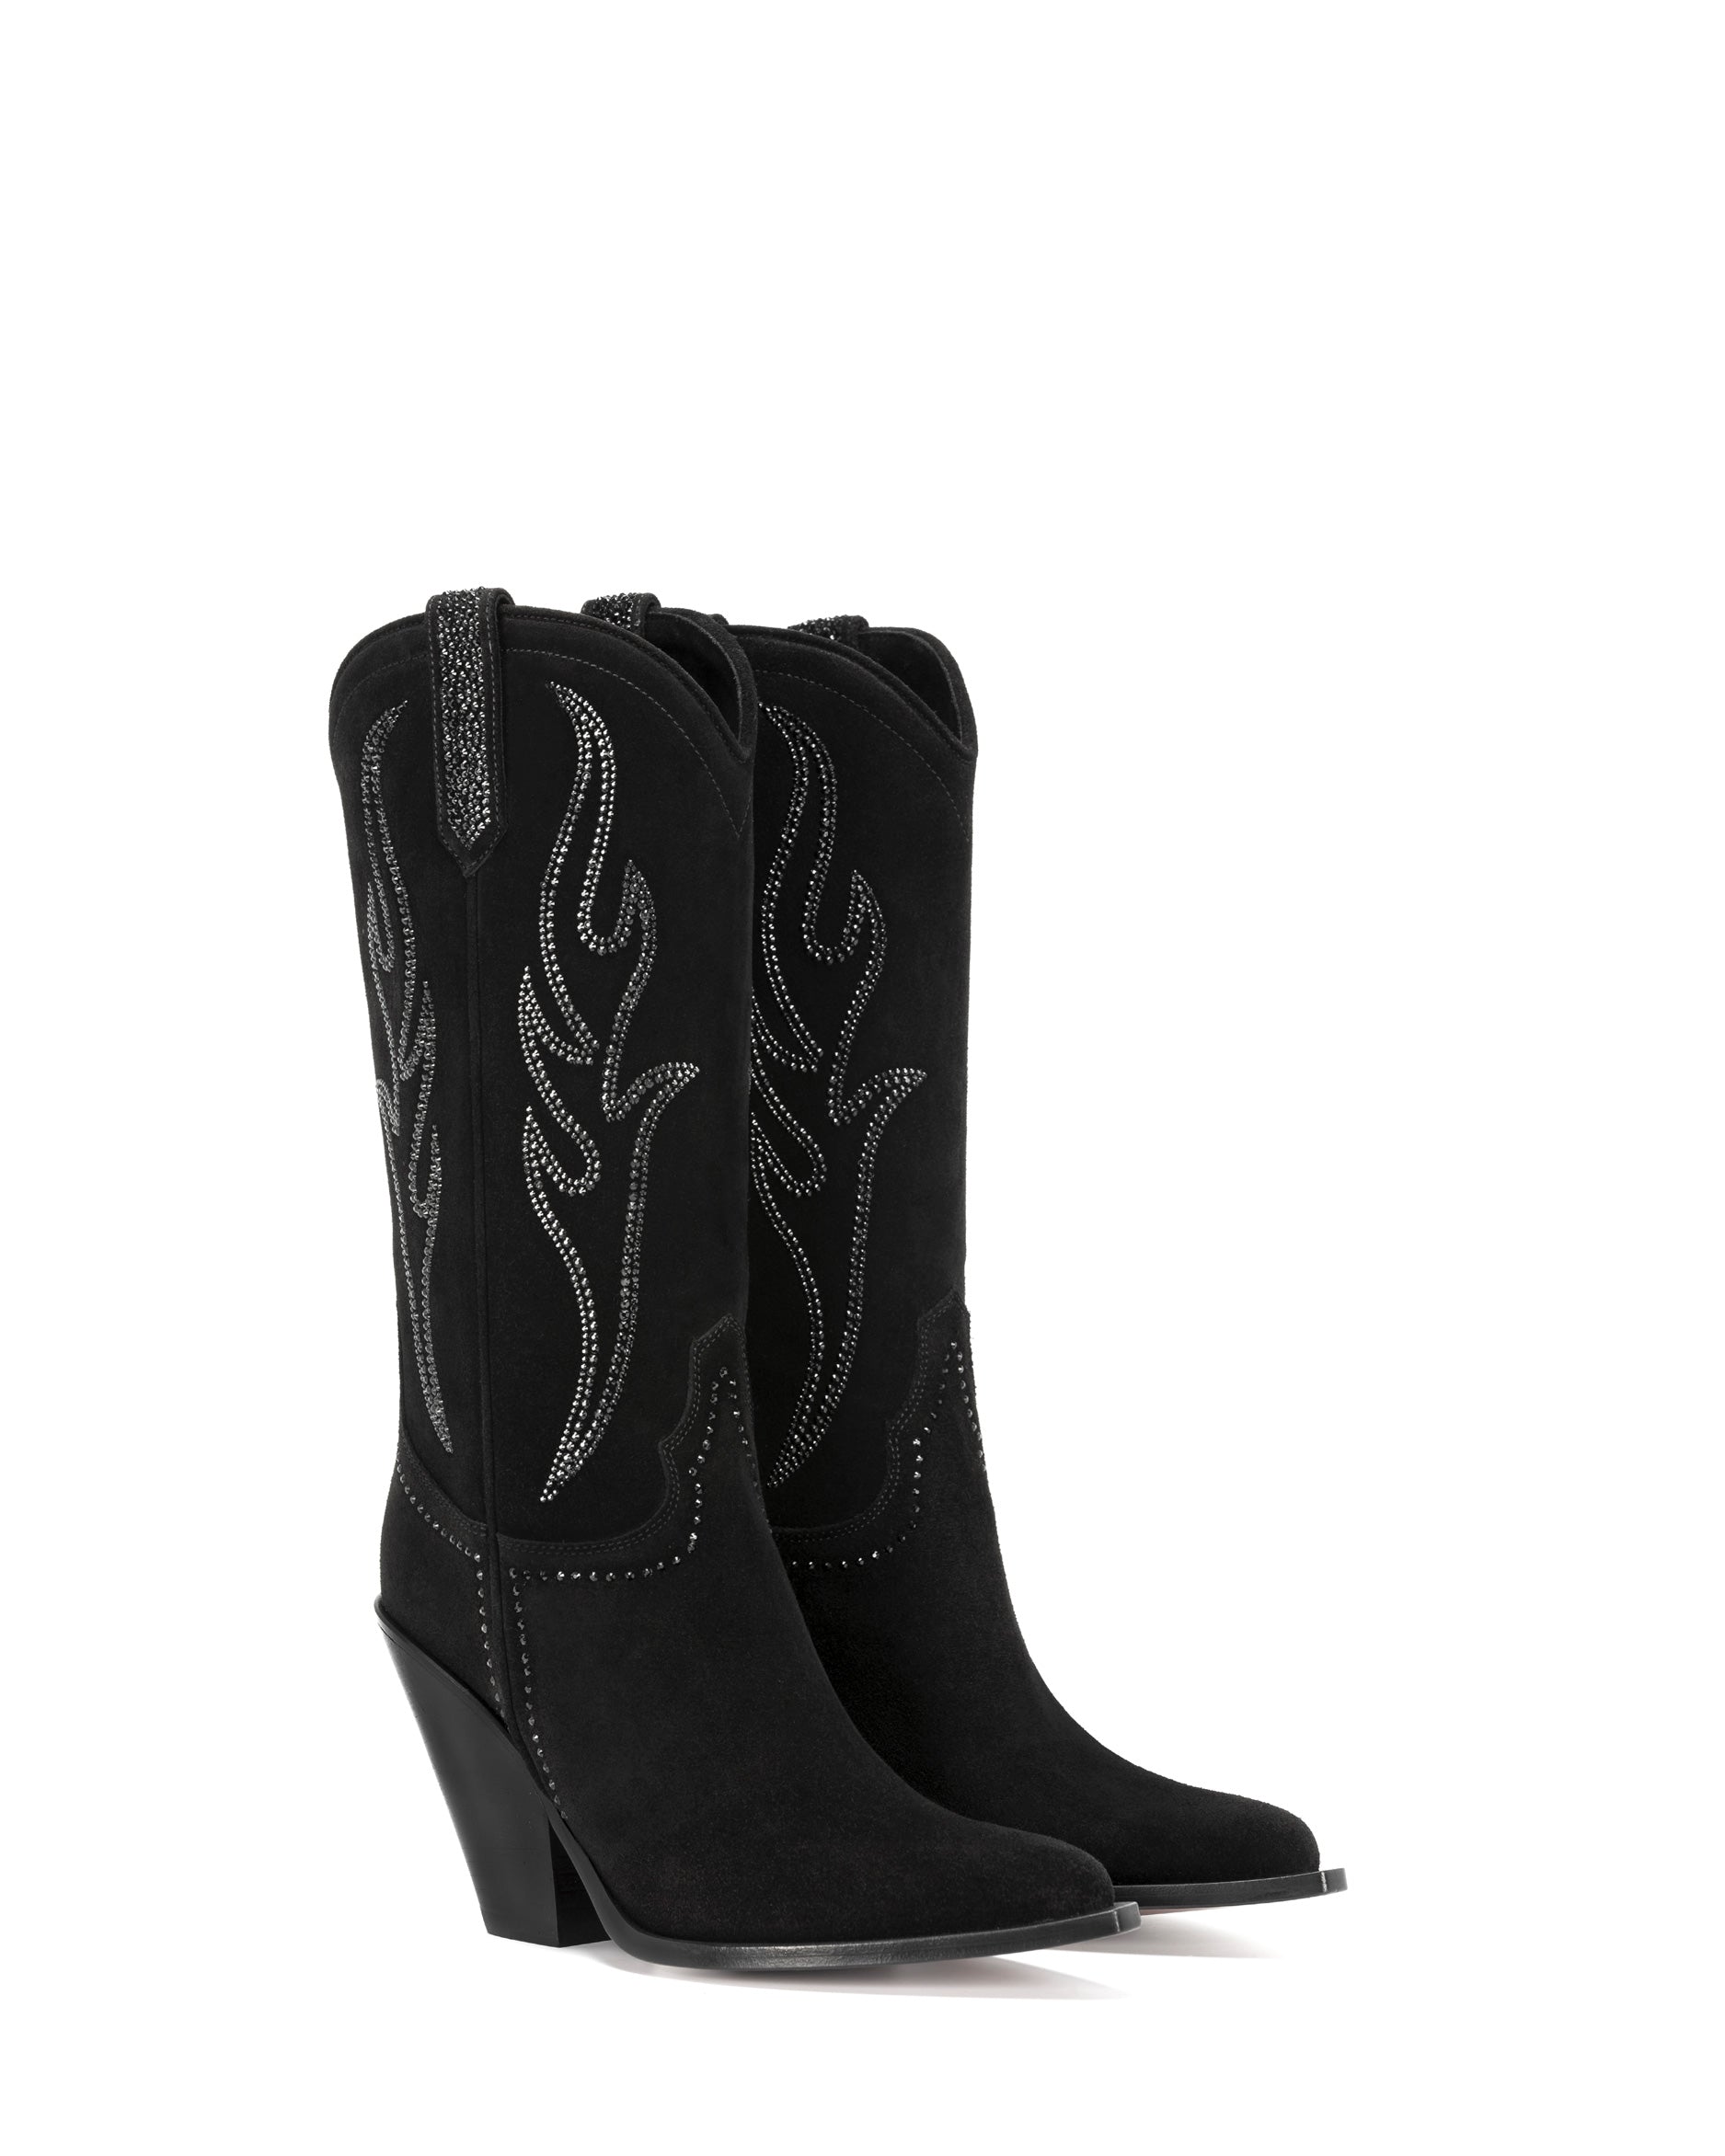 SANTA-FE-90-Women_s-Cowboy-Boots-in-Black-Suede-with-Black-Swarovski-Crystals_02_Front